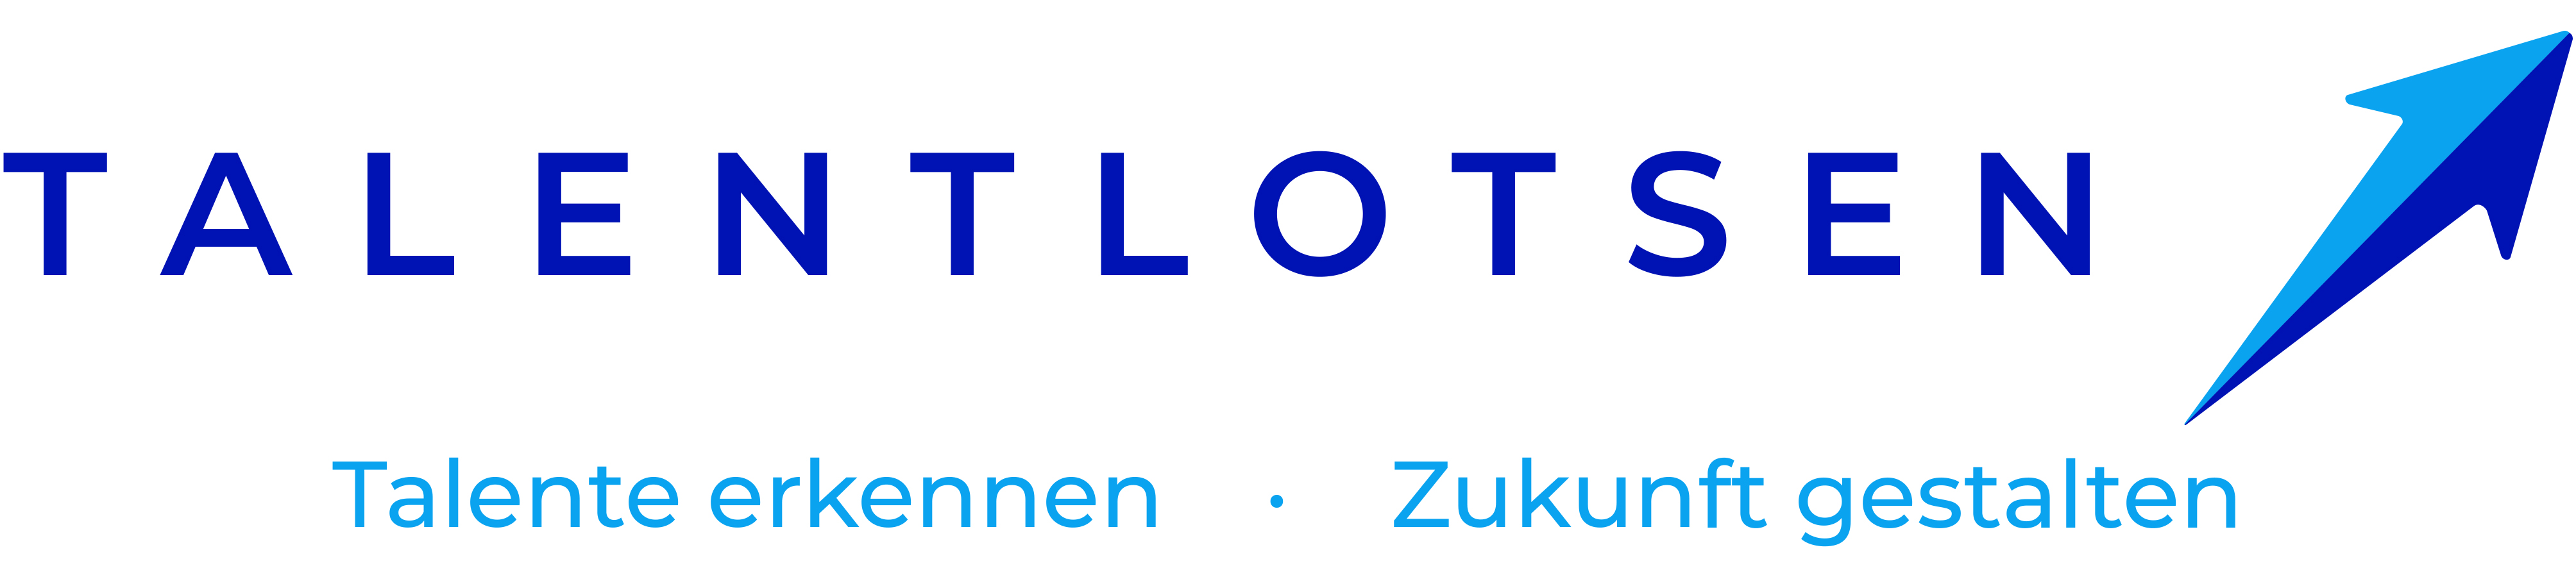 TALENTLOTSEN GmbH Logo